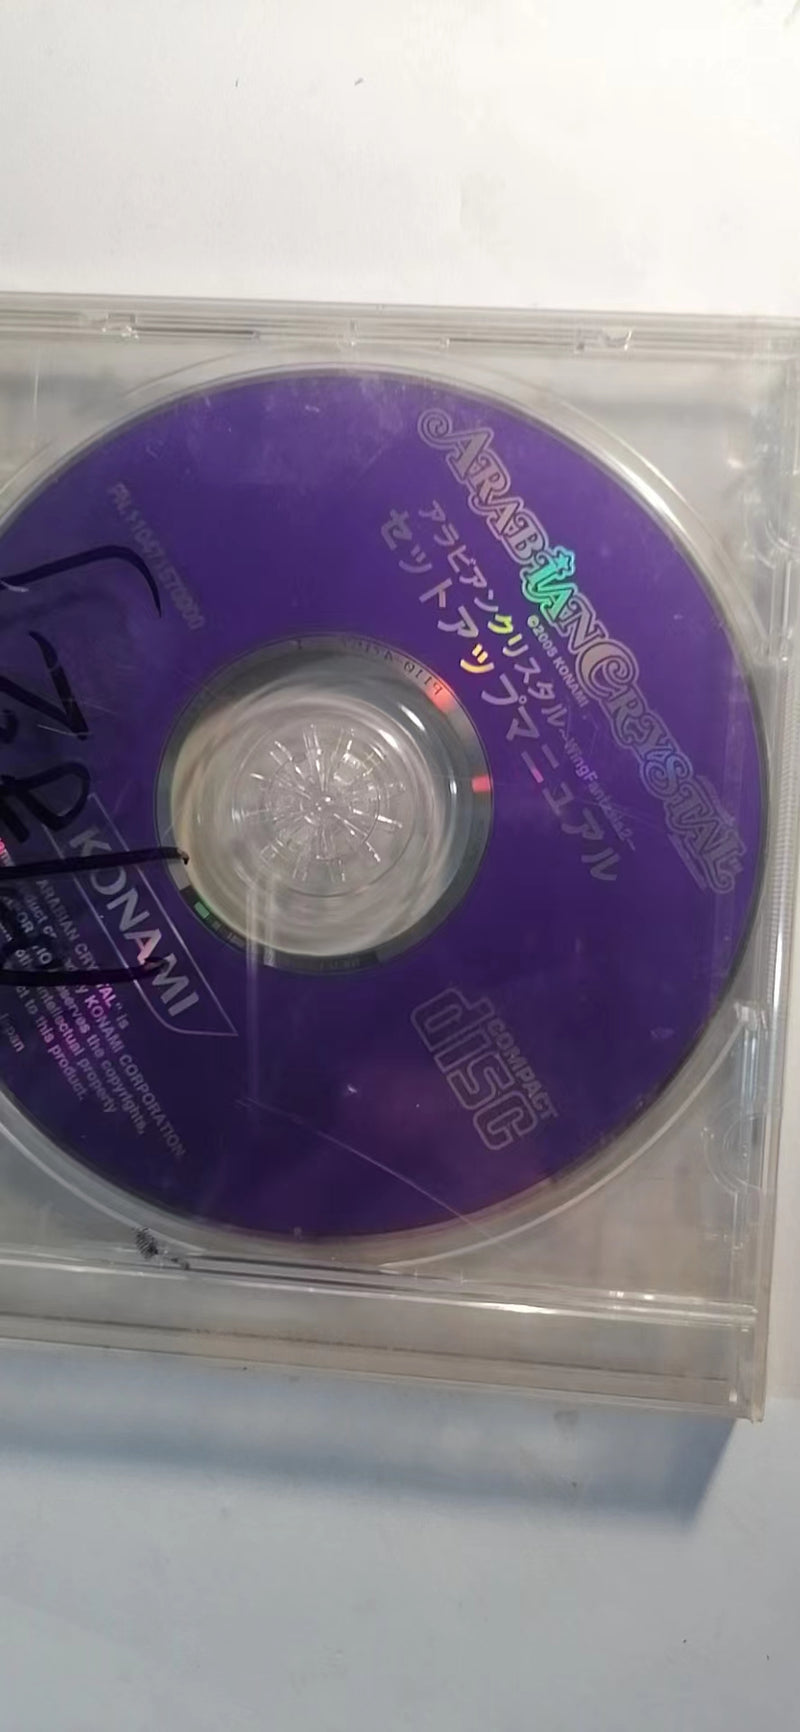 konami arcade cd-rom ARABIAN CRYSTAL  disc only  unopened